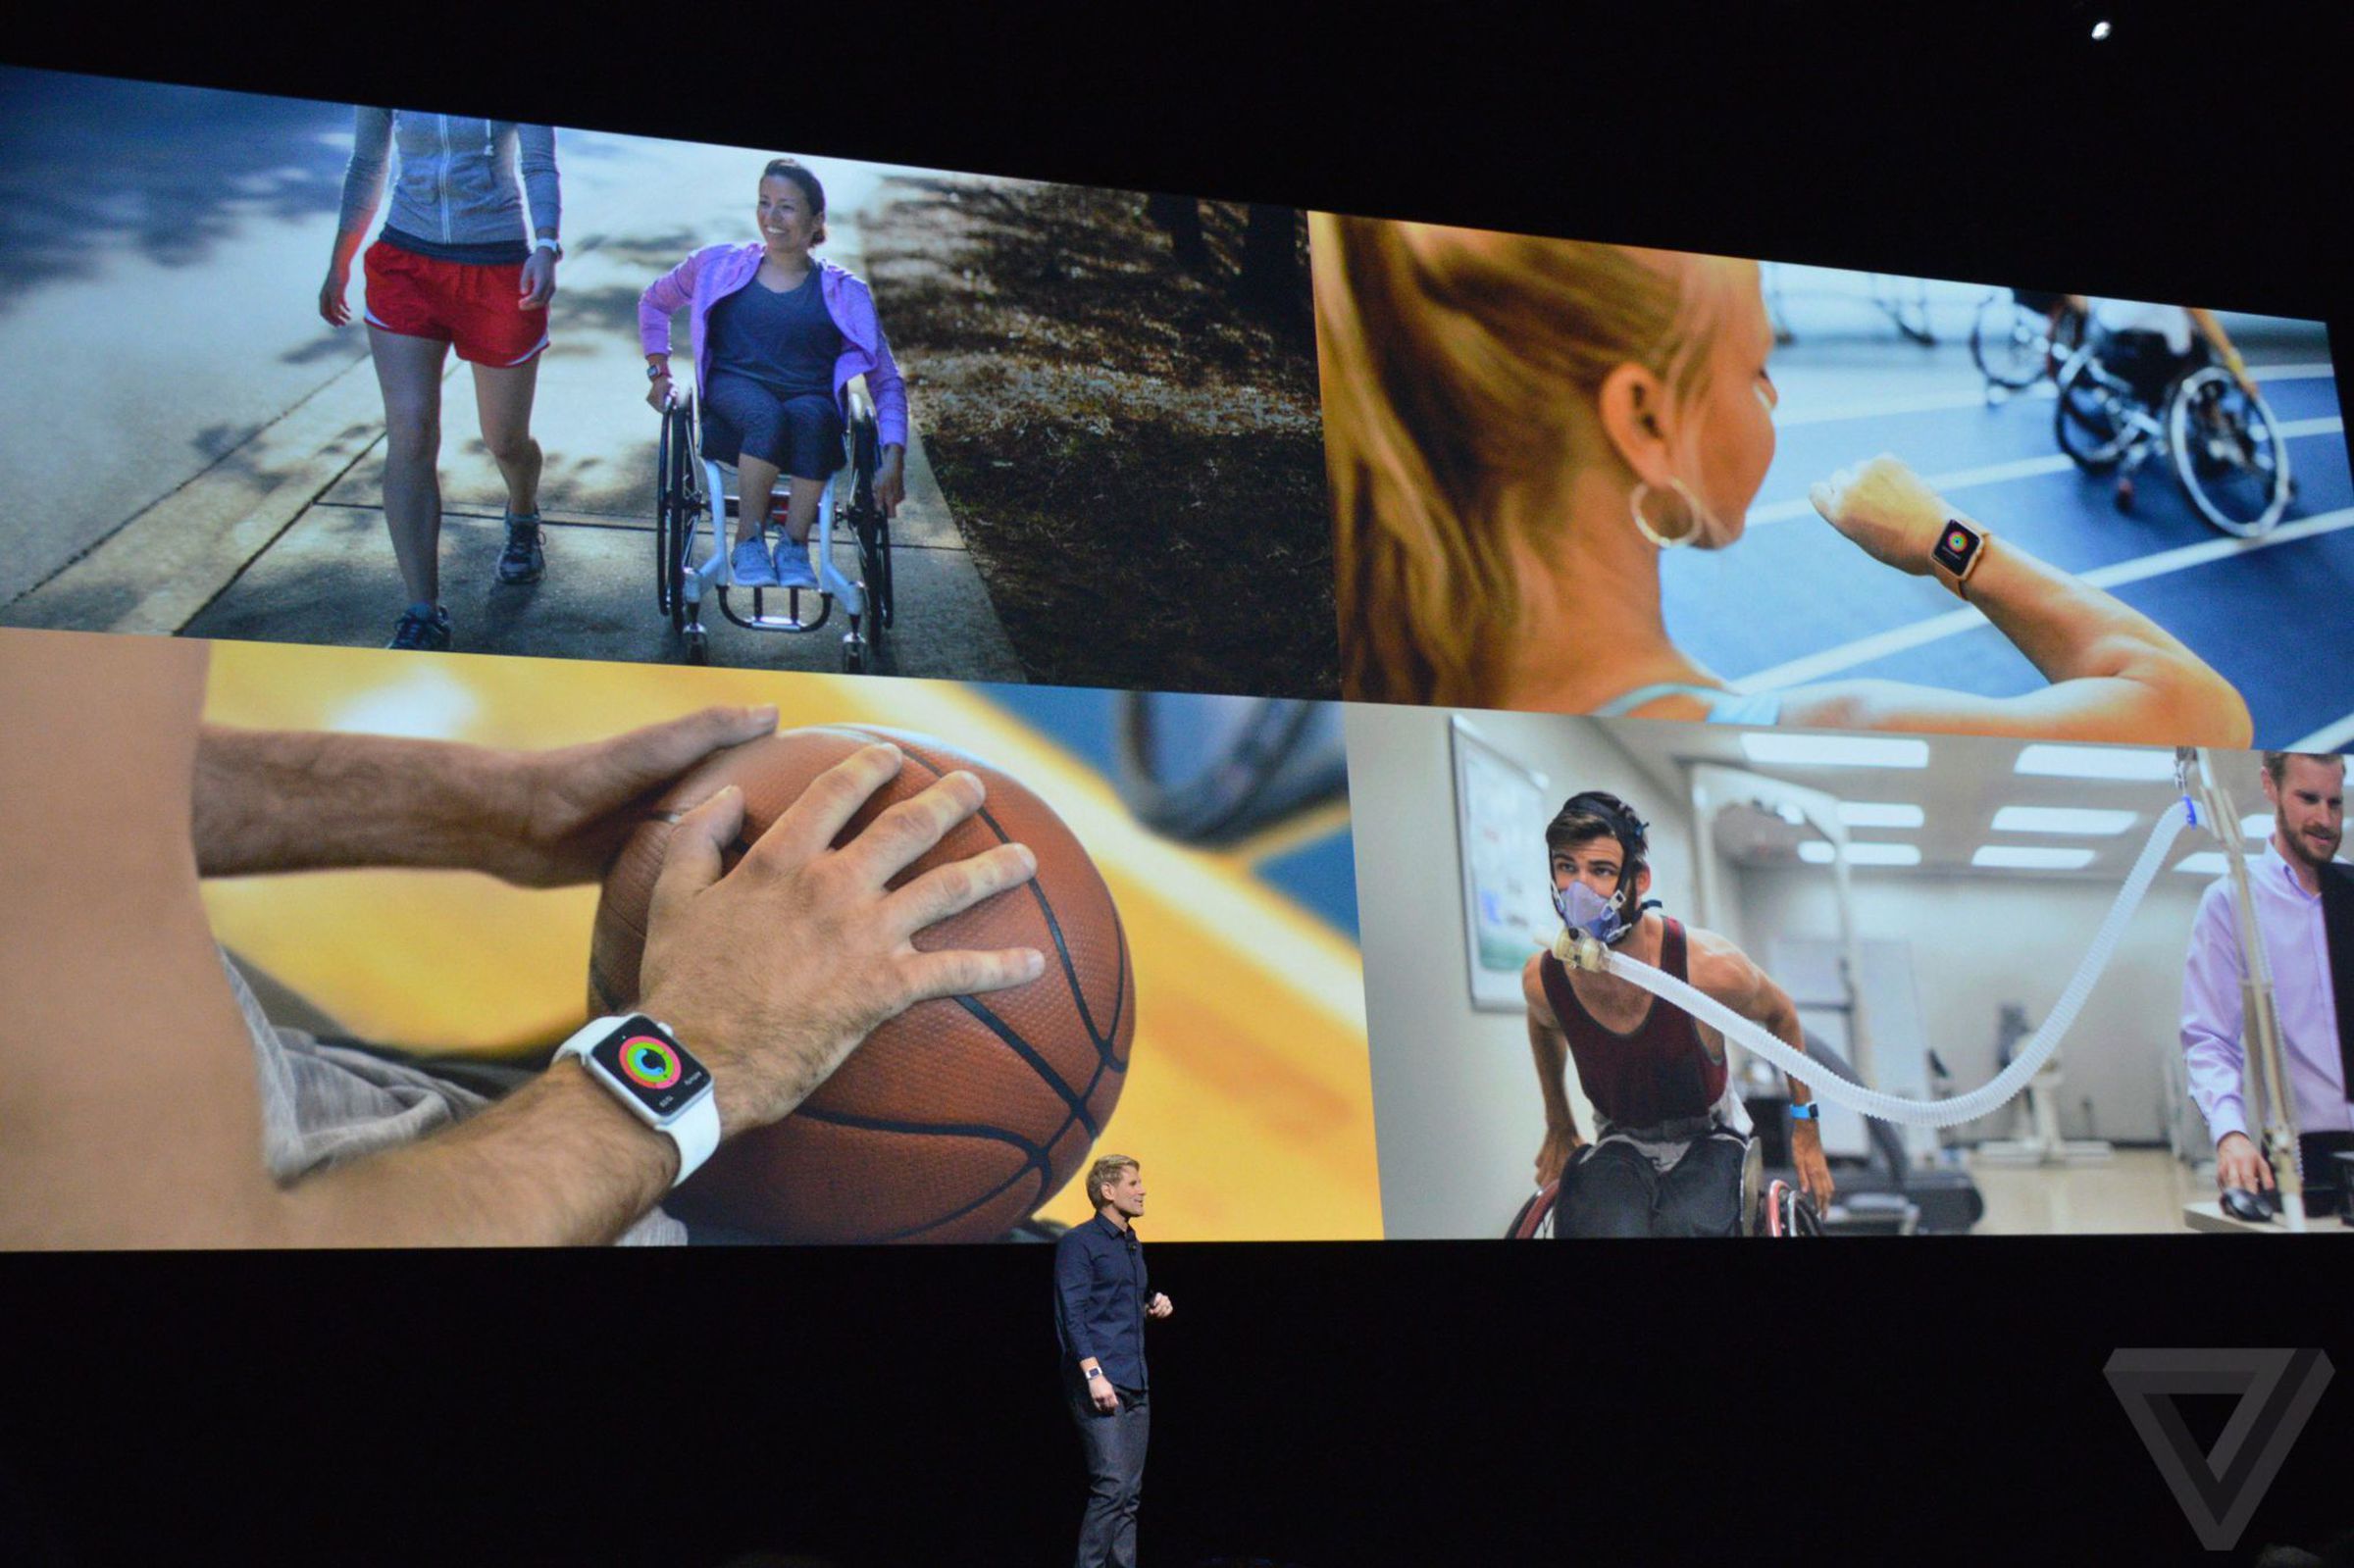 watchOS 3 at WWDC16 announcement photos